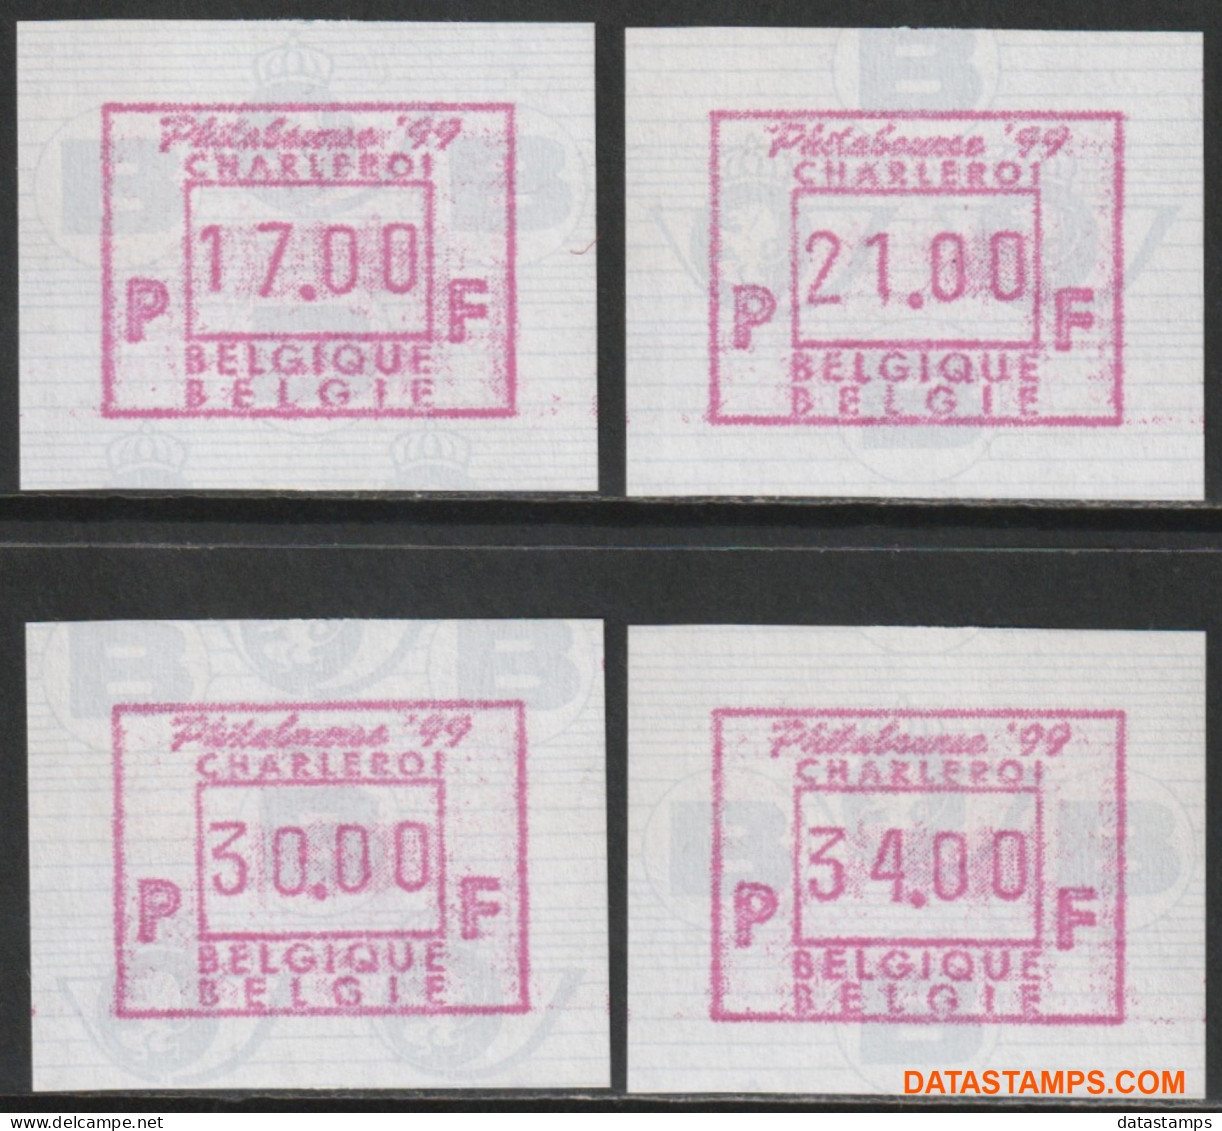 België 1999 - Mi:autom 38, Yv:TD 47, OBP:ATM 98 Set, Machine Stamp - XX - Philabourse 99 - Postfris